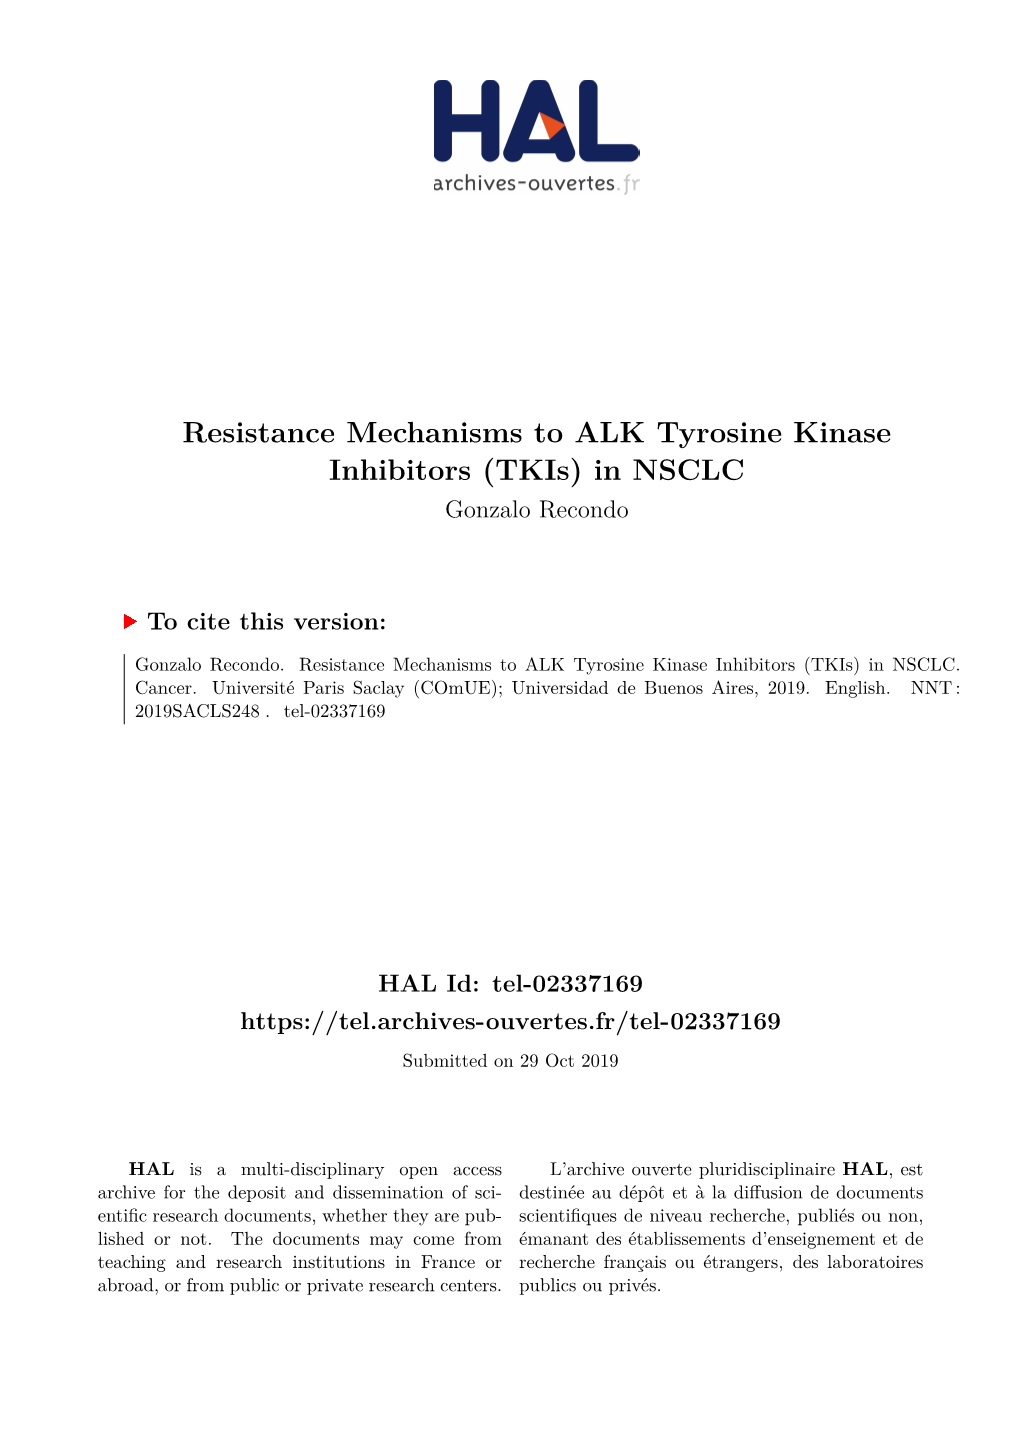 Resistance Mechanisms to ALK Tyrosine Kinase Inhibitors (Tkis) in NSCLC Gonzalo Recondo